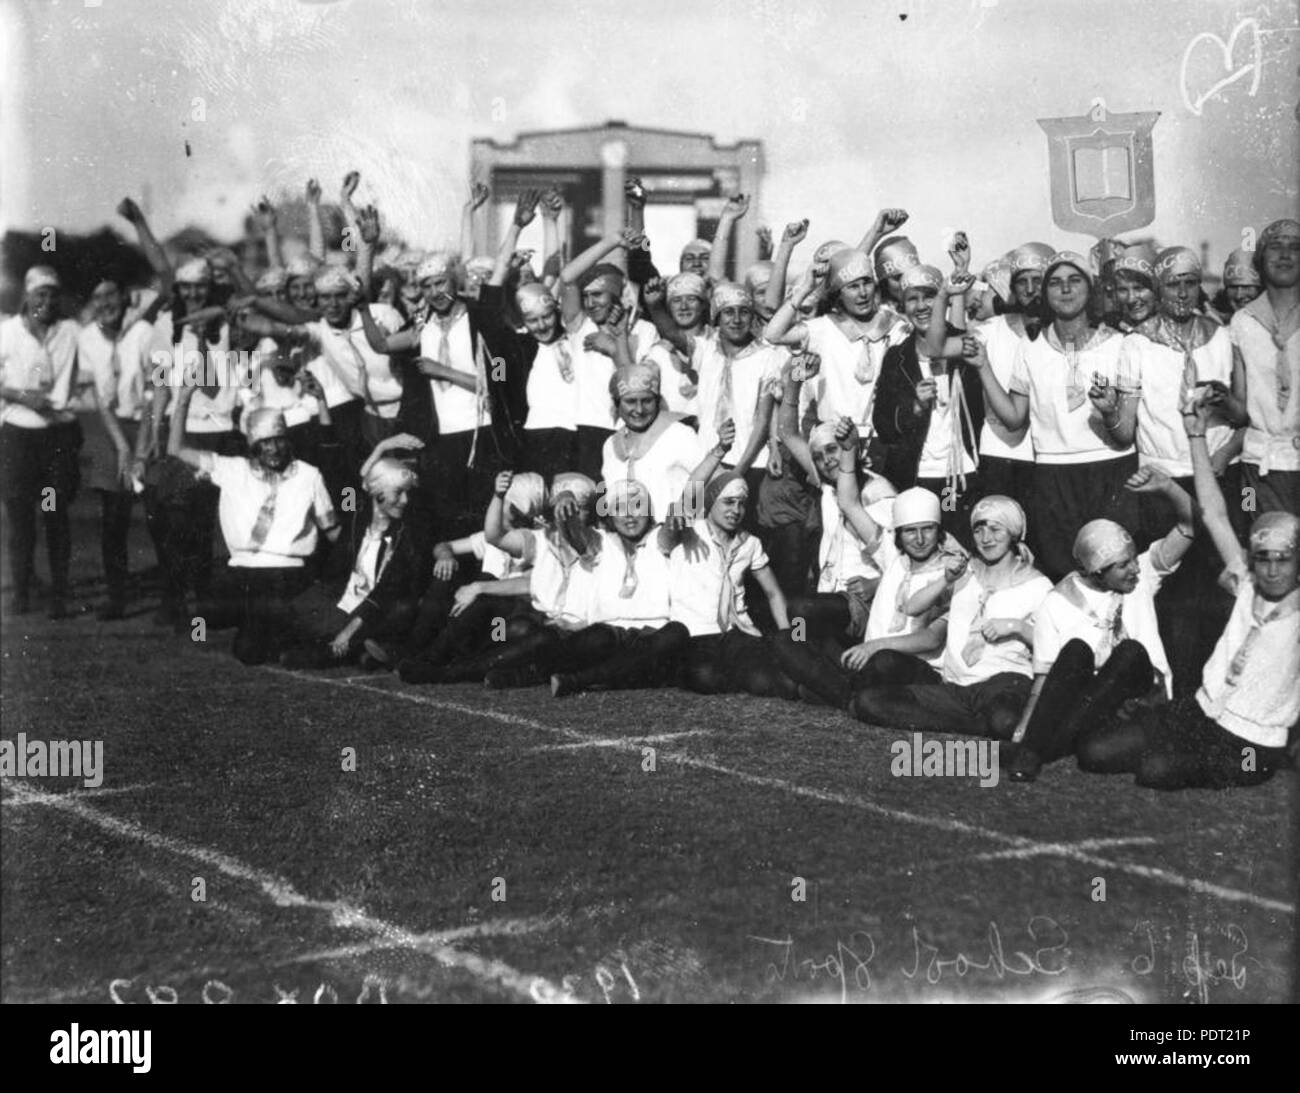 202 StateLibQld 1 106216 Sports day at Brisbane Girls Grammar School, 1932 Stock Photo